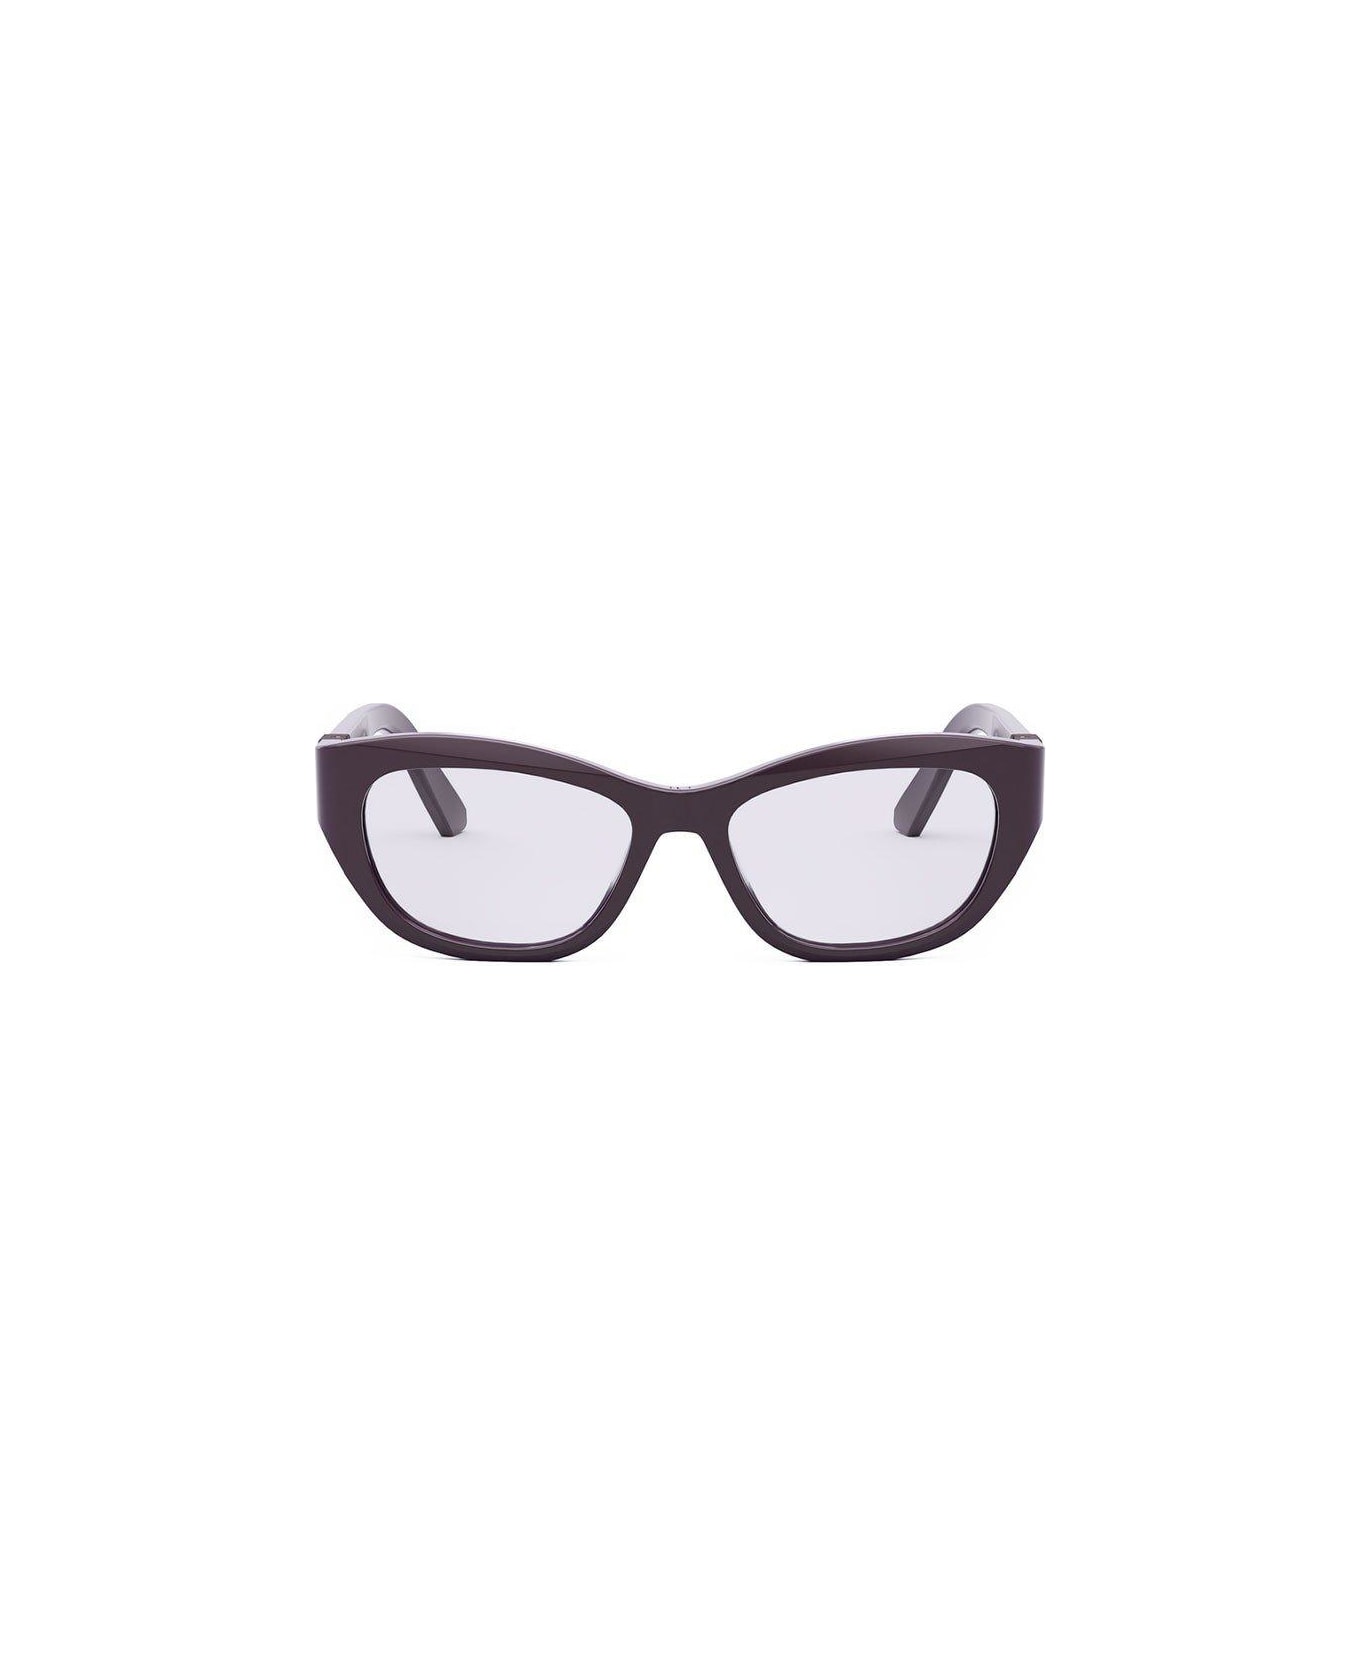 Dior Eyewear Cat-eye Glasses - 6000